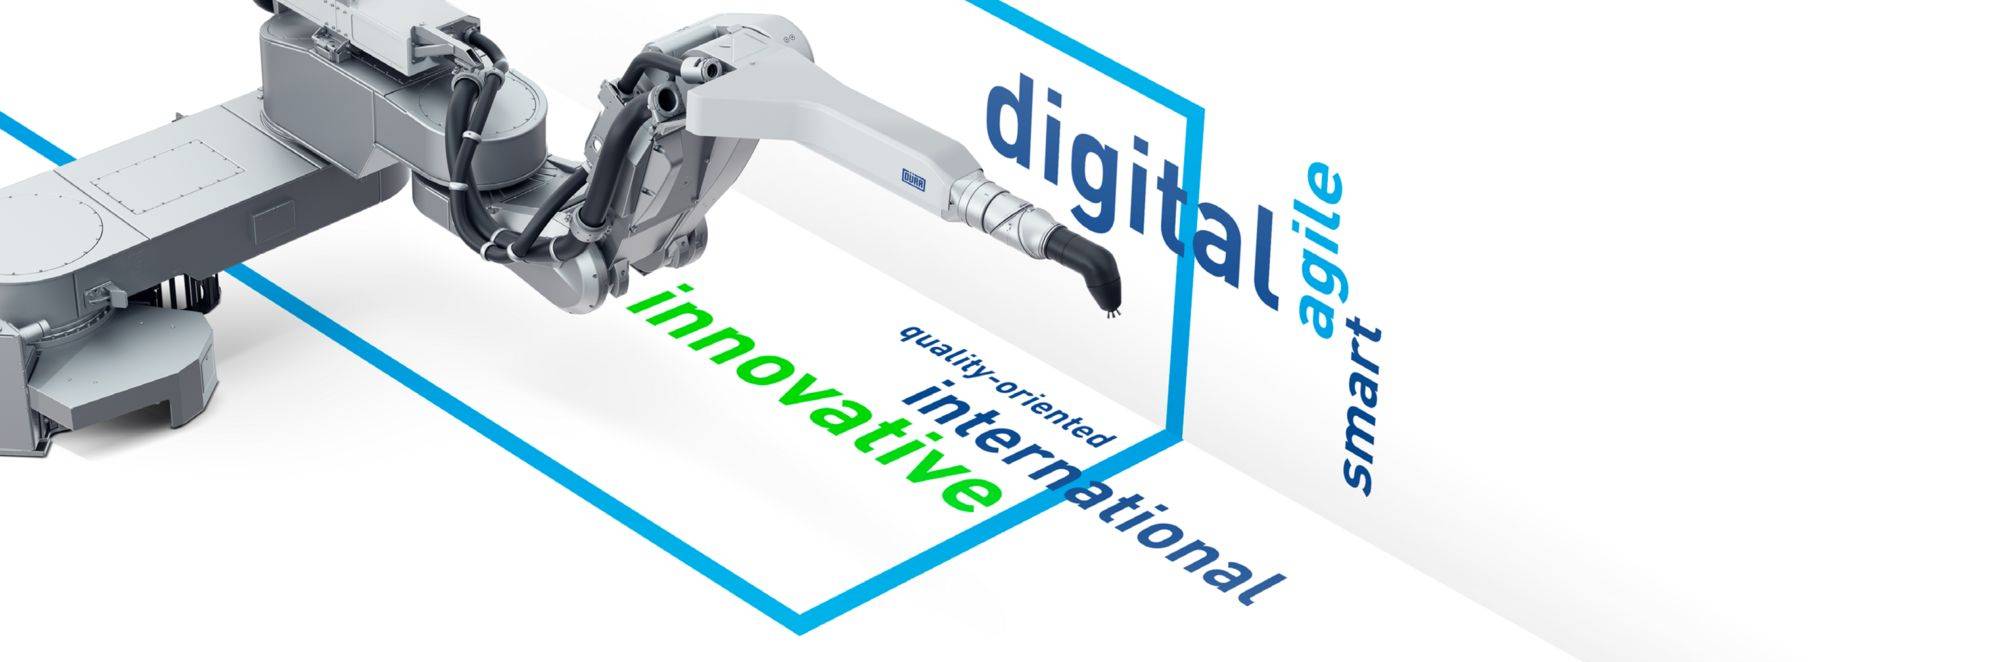 Roboter druckt Attribute digitaler Produkte: innovative, international, quality-oriented, digital, agile, smart